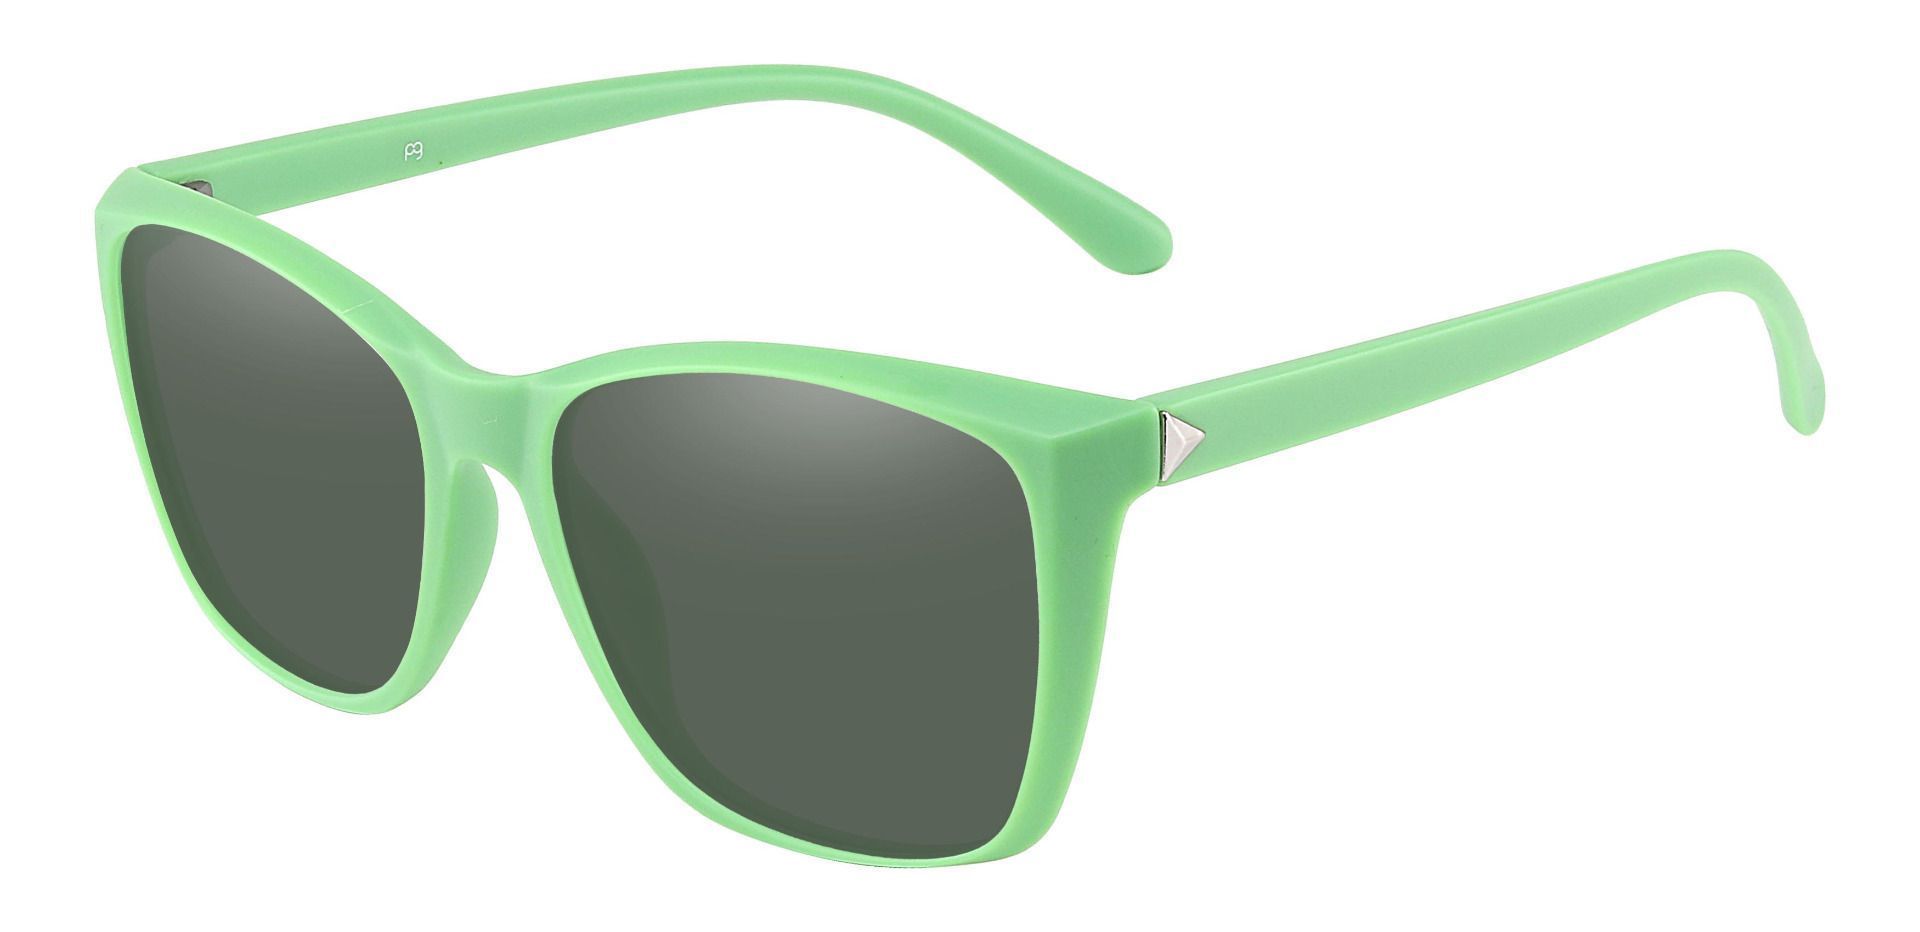 Hickory Square Prescription Sunglasses - Green Frame With Green Lenses